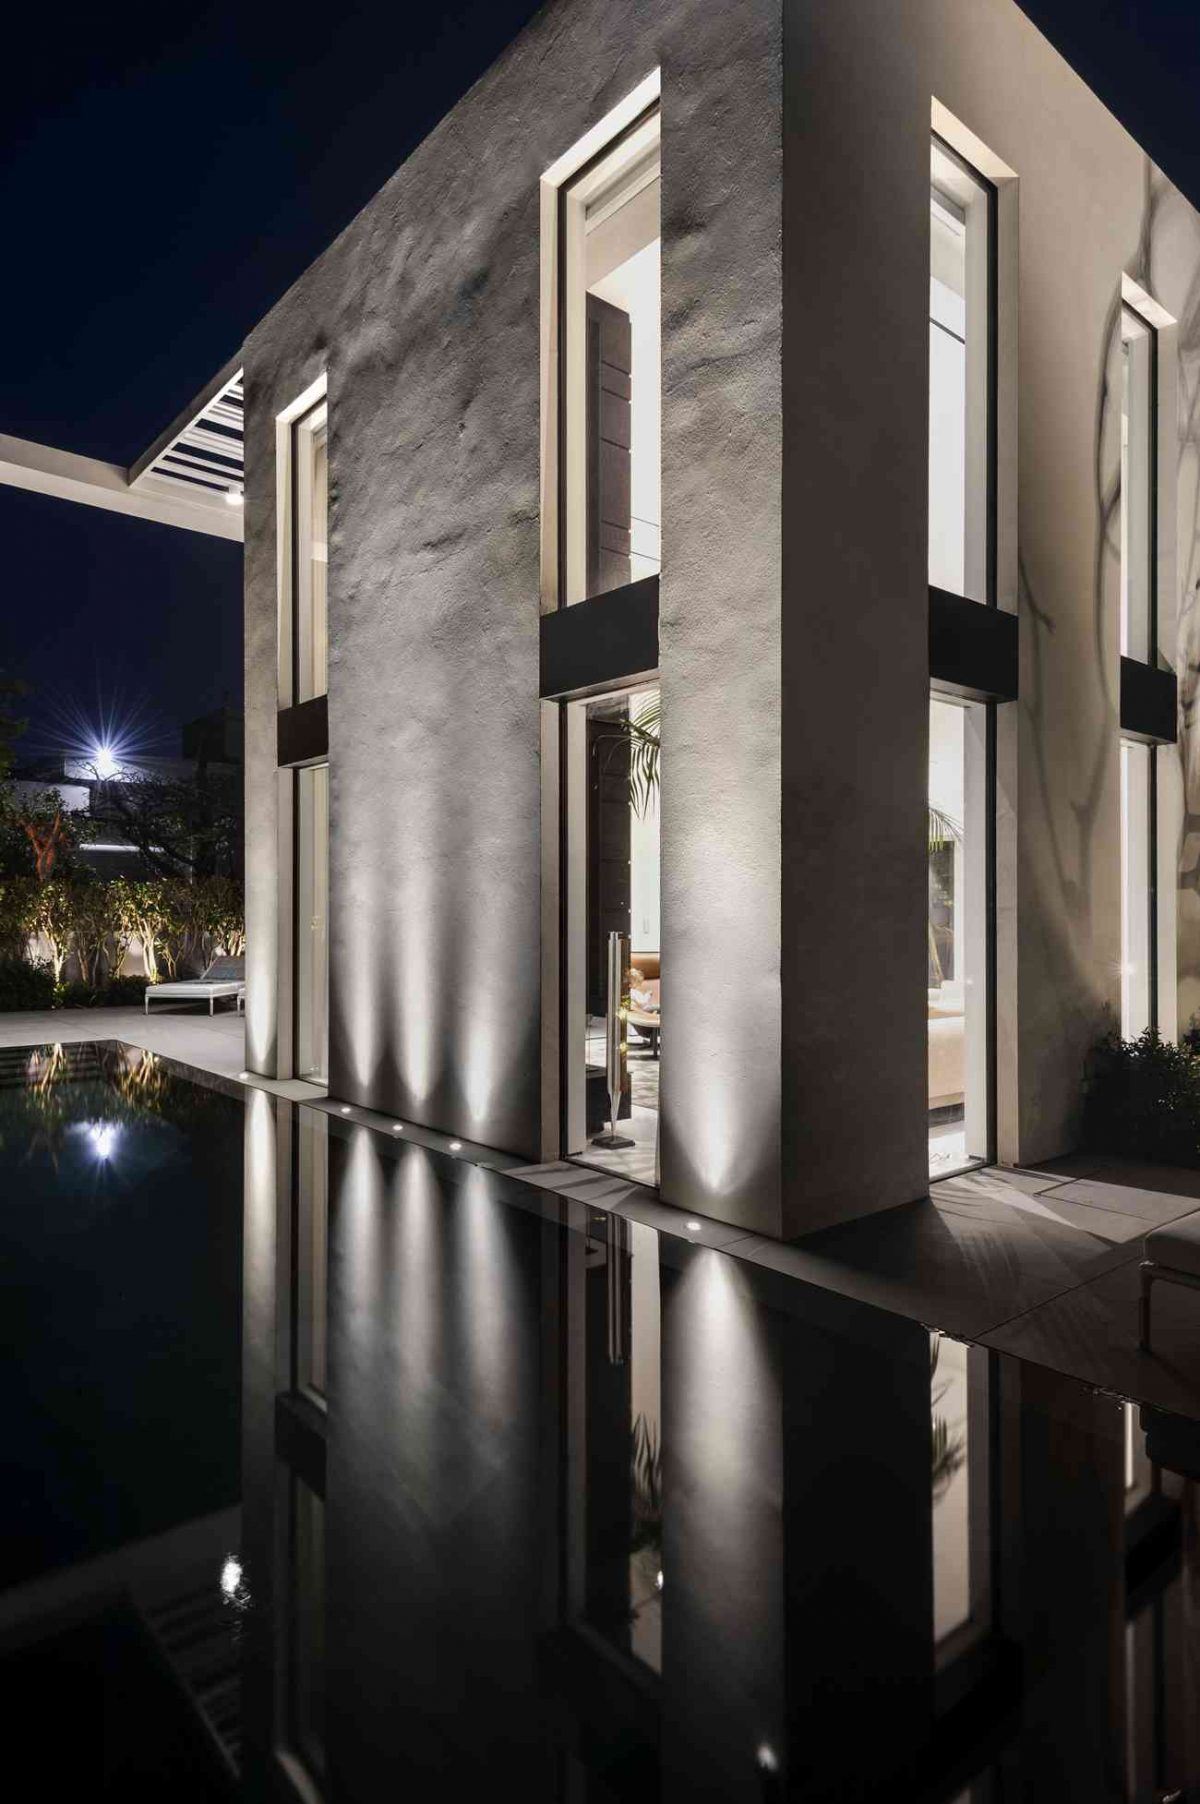 Simoene Architects Ltd – Central Israel תאורה מיוחדת על קירות הבית מבחוץ על ידי קמחי דורי